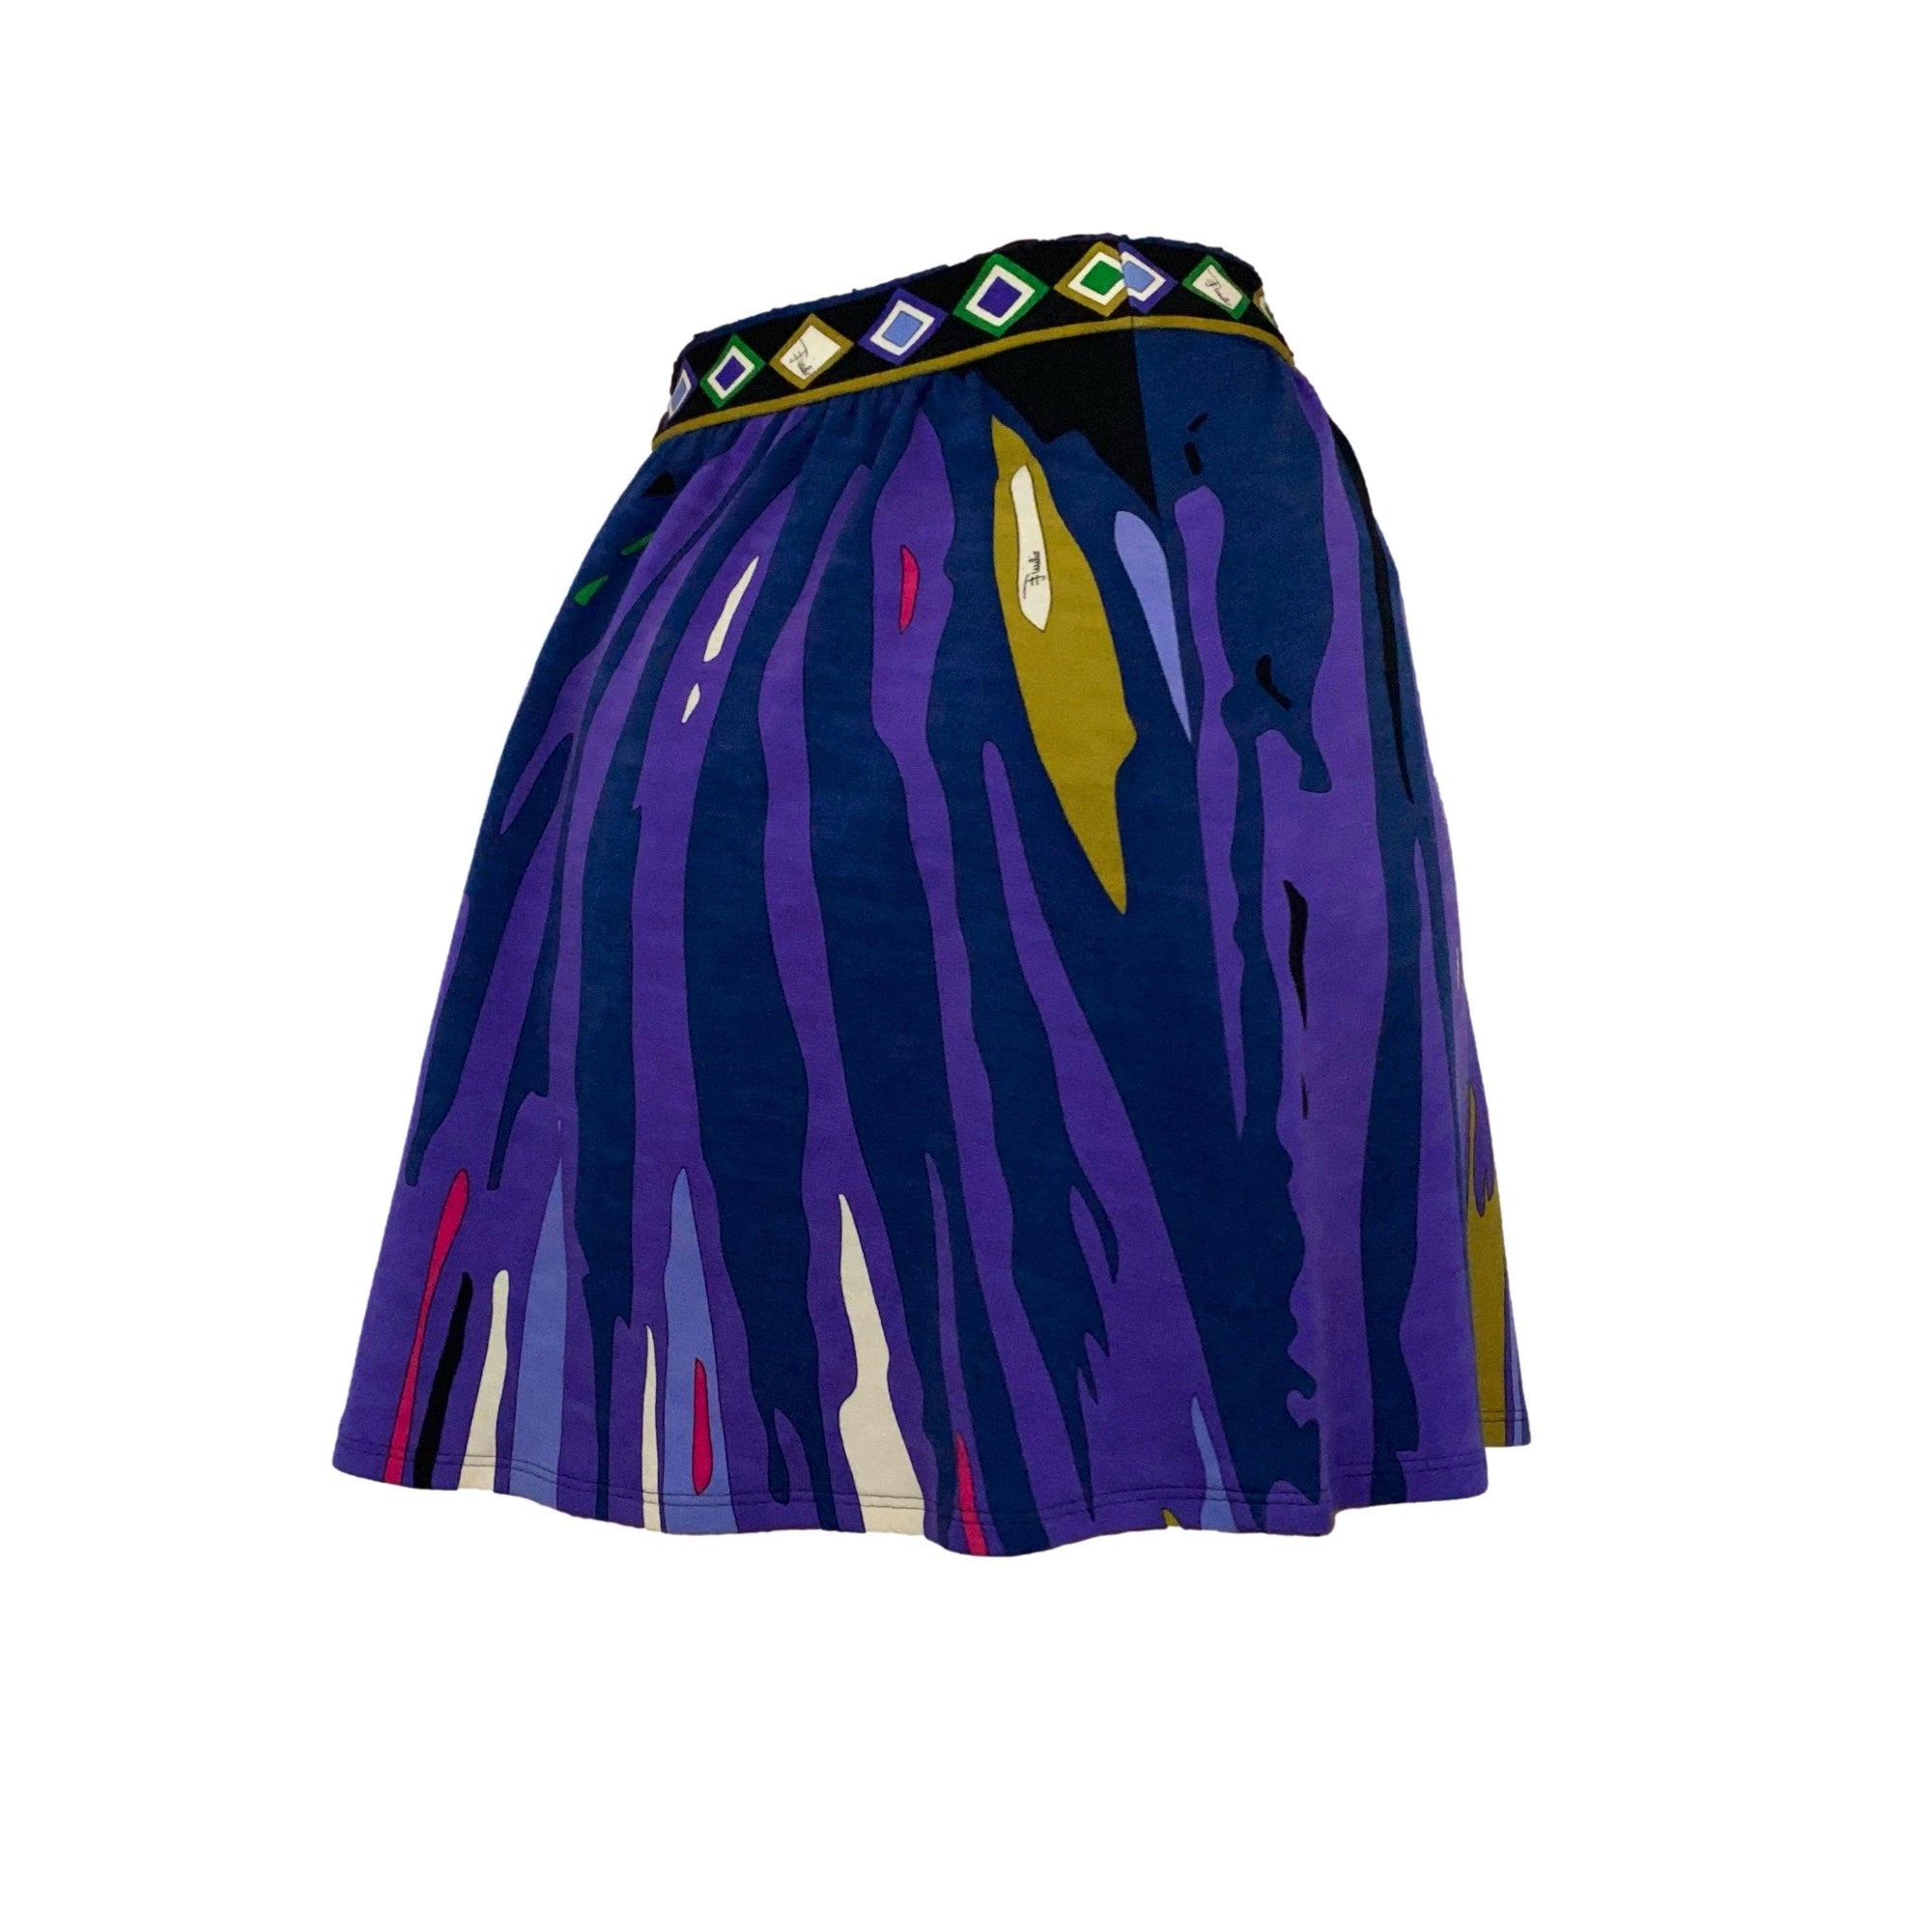 Pucci Purple Print Stretch A Line Skirt - Apparel